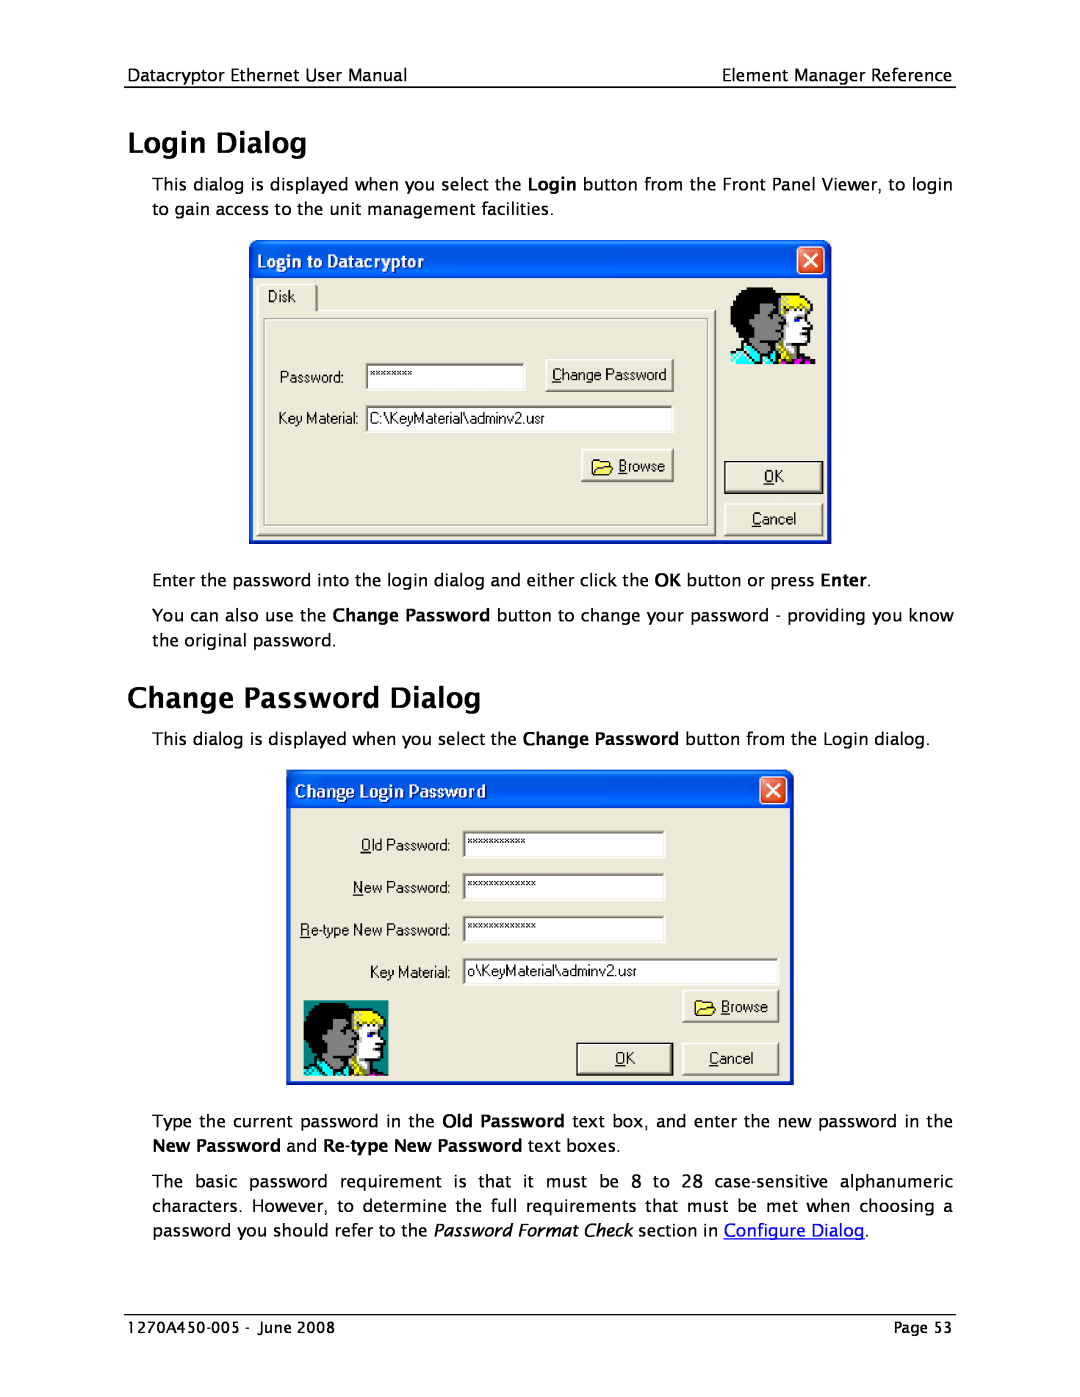 Angenieux 1270A450-005 user manual Login Dialog, Change Password Dialog 